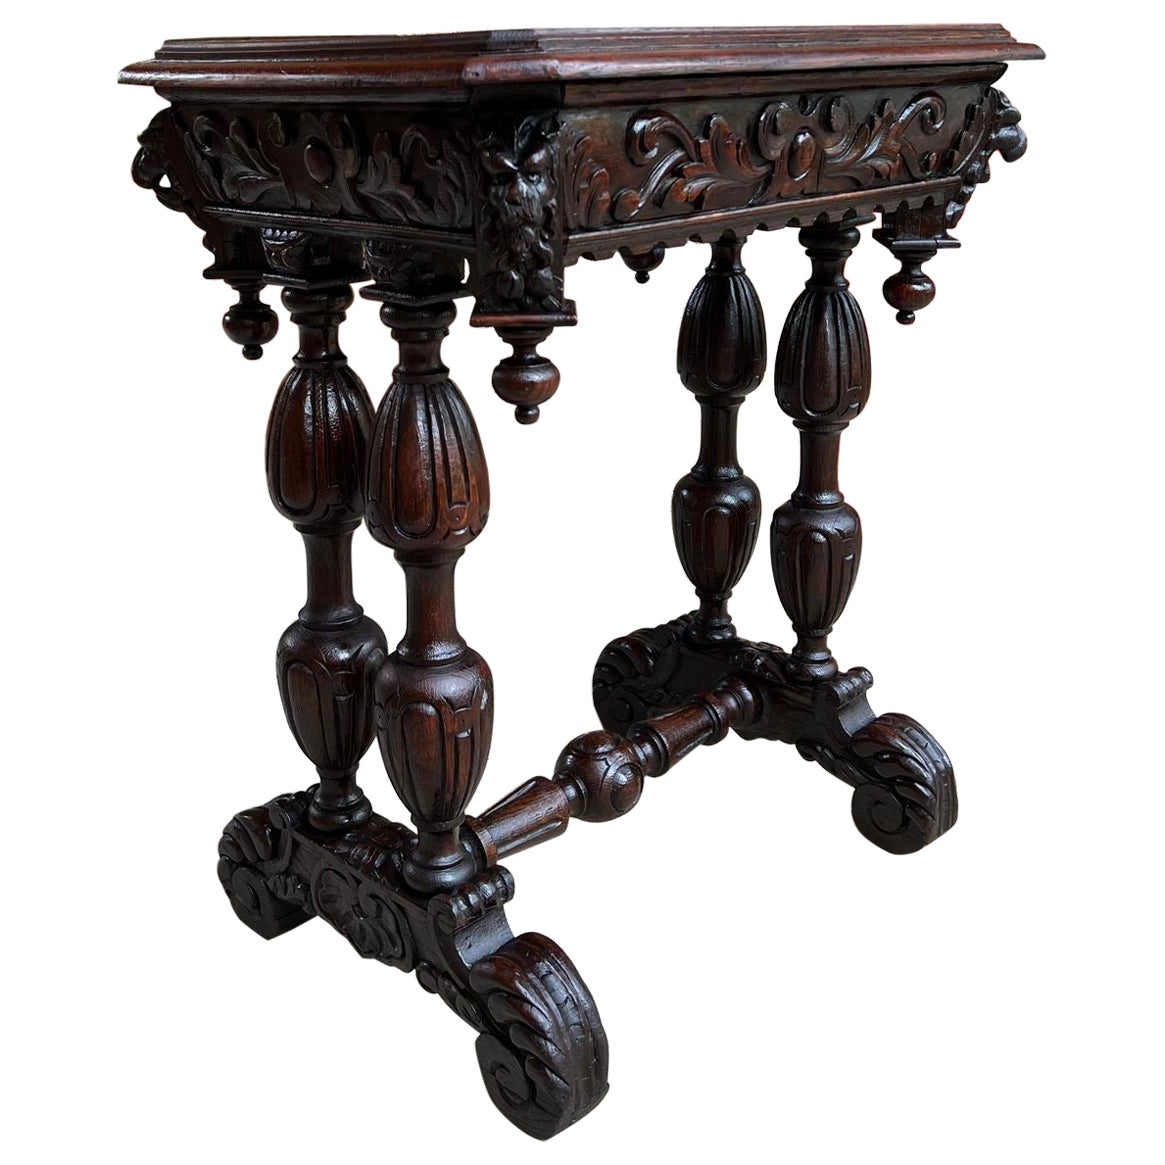 Antique French Side Table Petite Renaissance Carved Oak Trestle Desk Craft Table For Sale